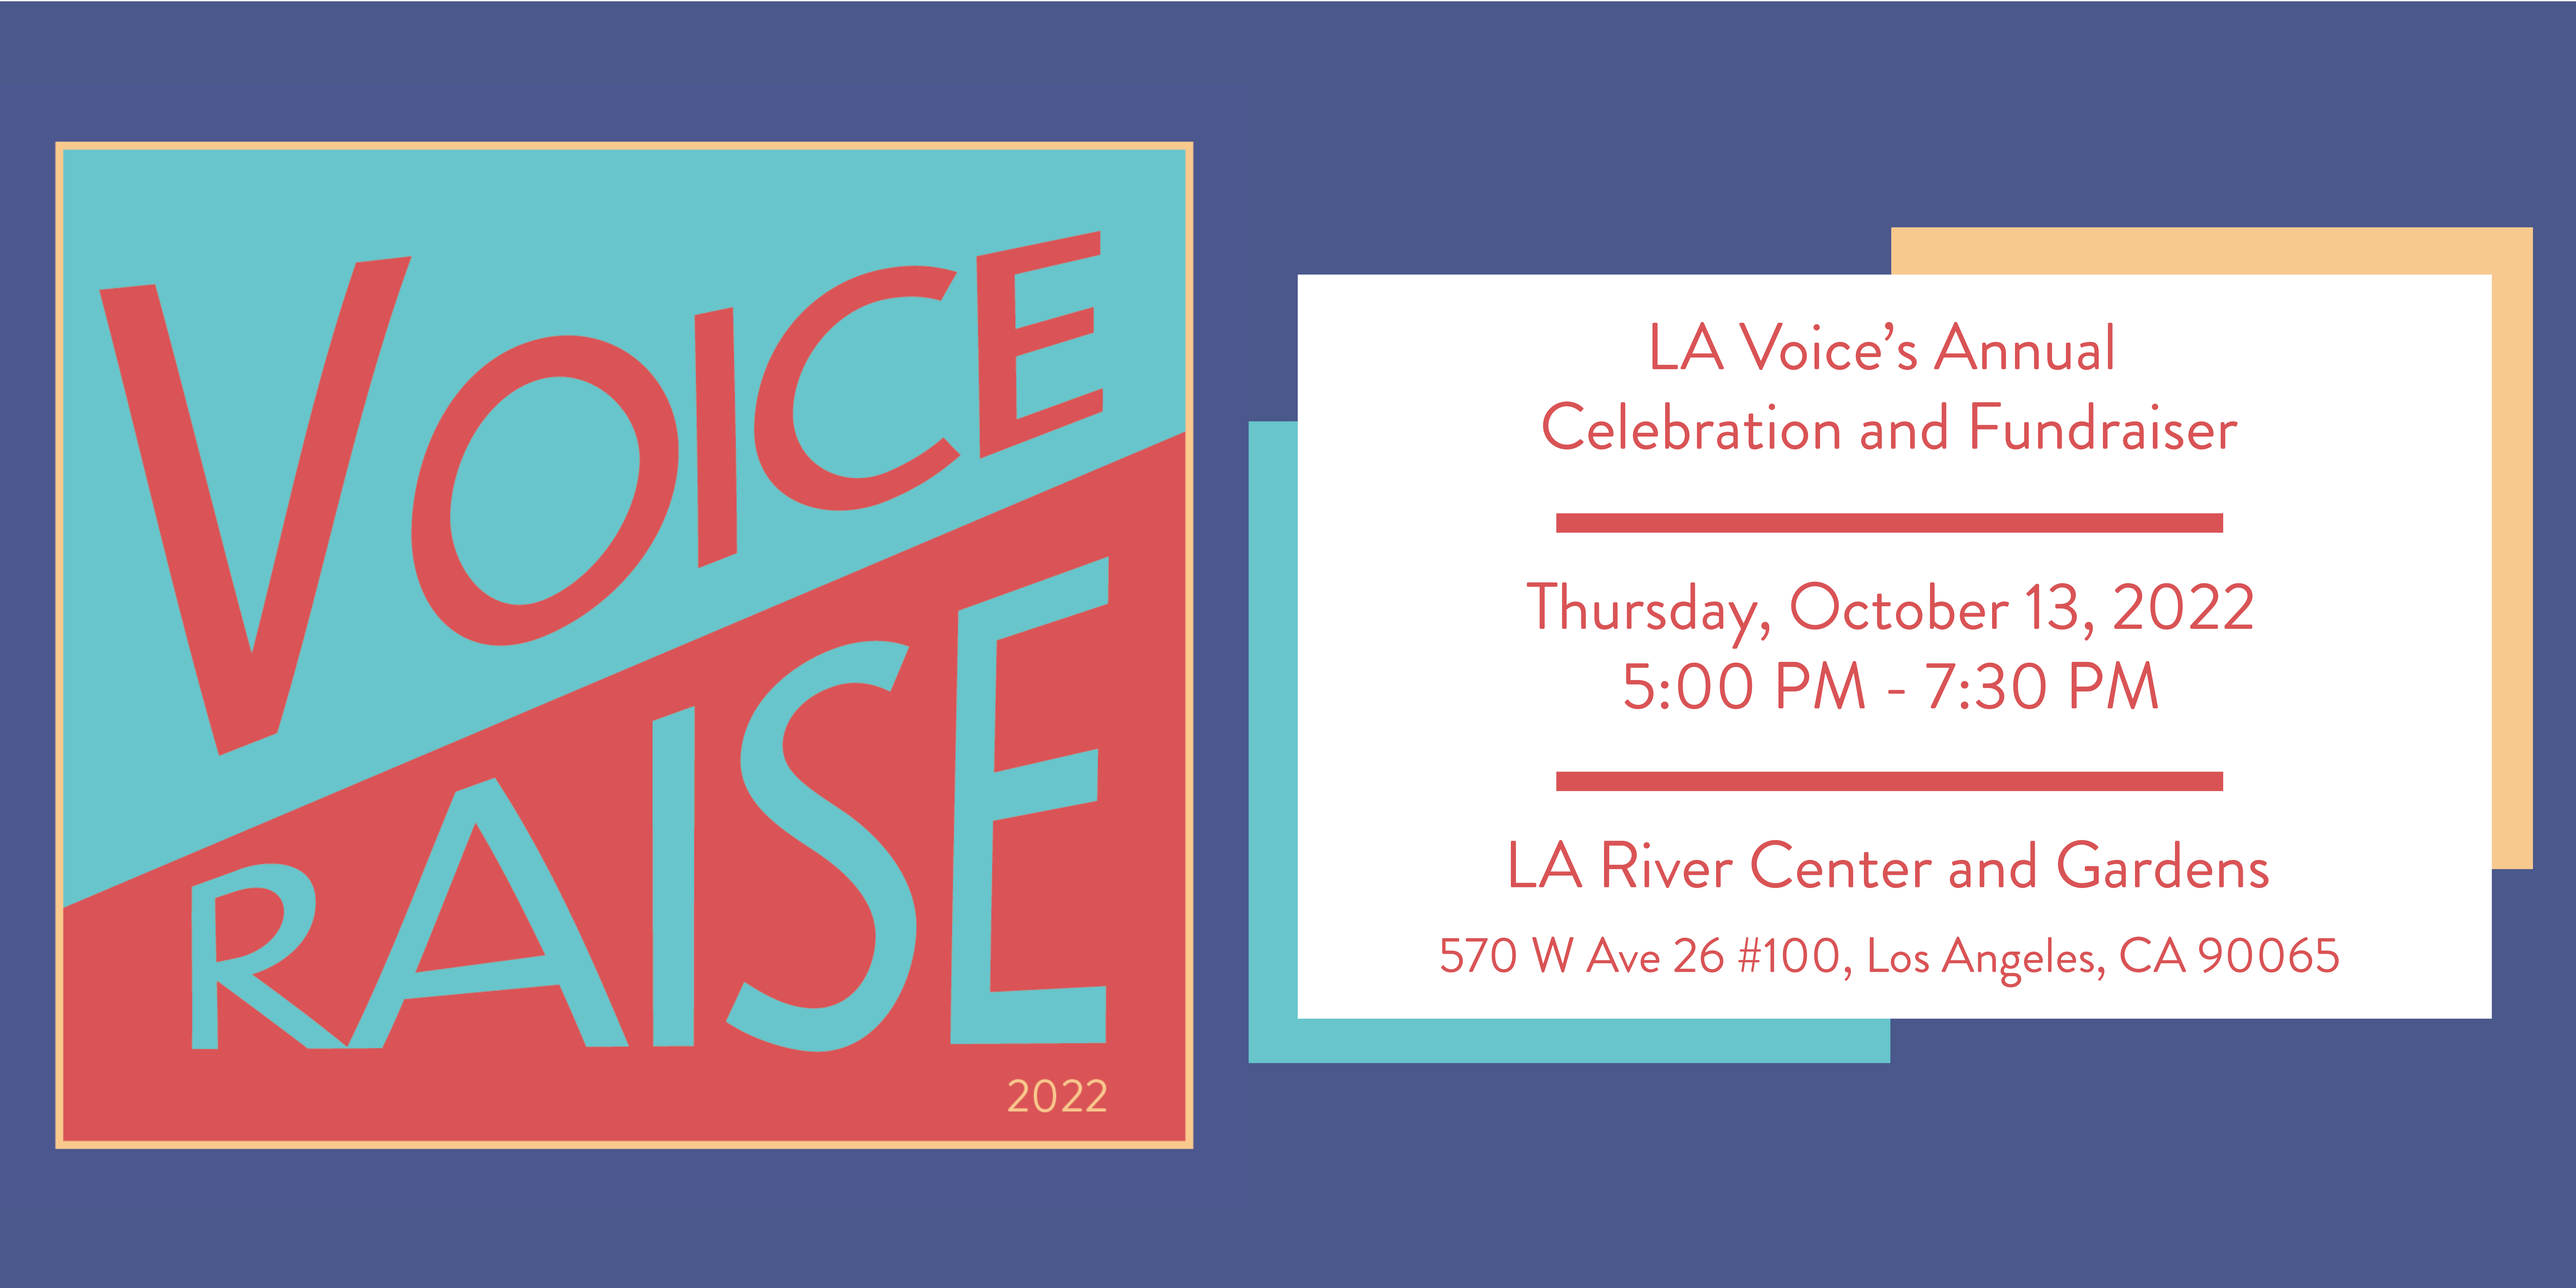 Voice Raise/Voz Alza, LA Voice's annual celebration and fundraiser, October 13, 2022, Los Angeles, CA"